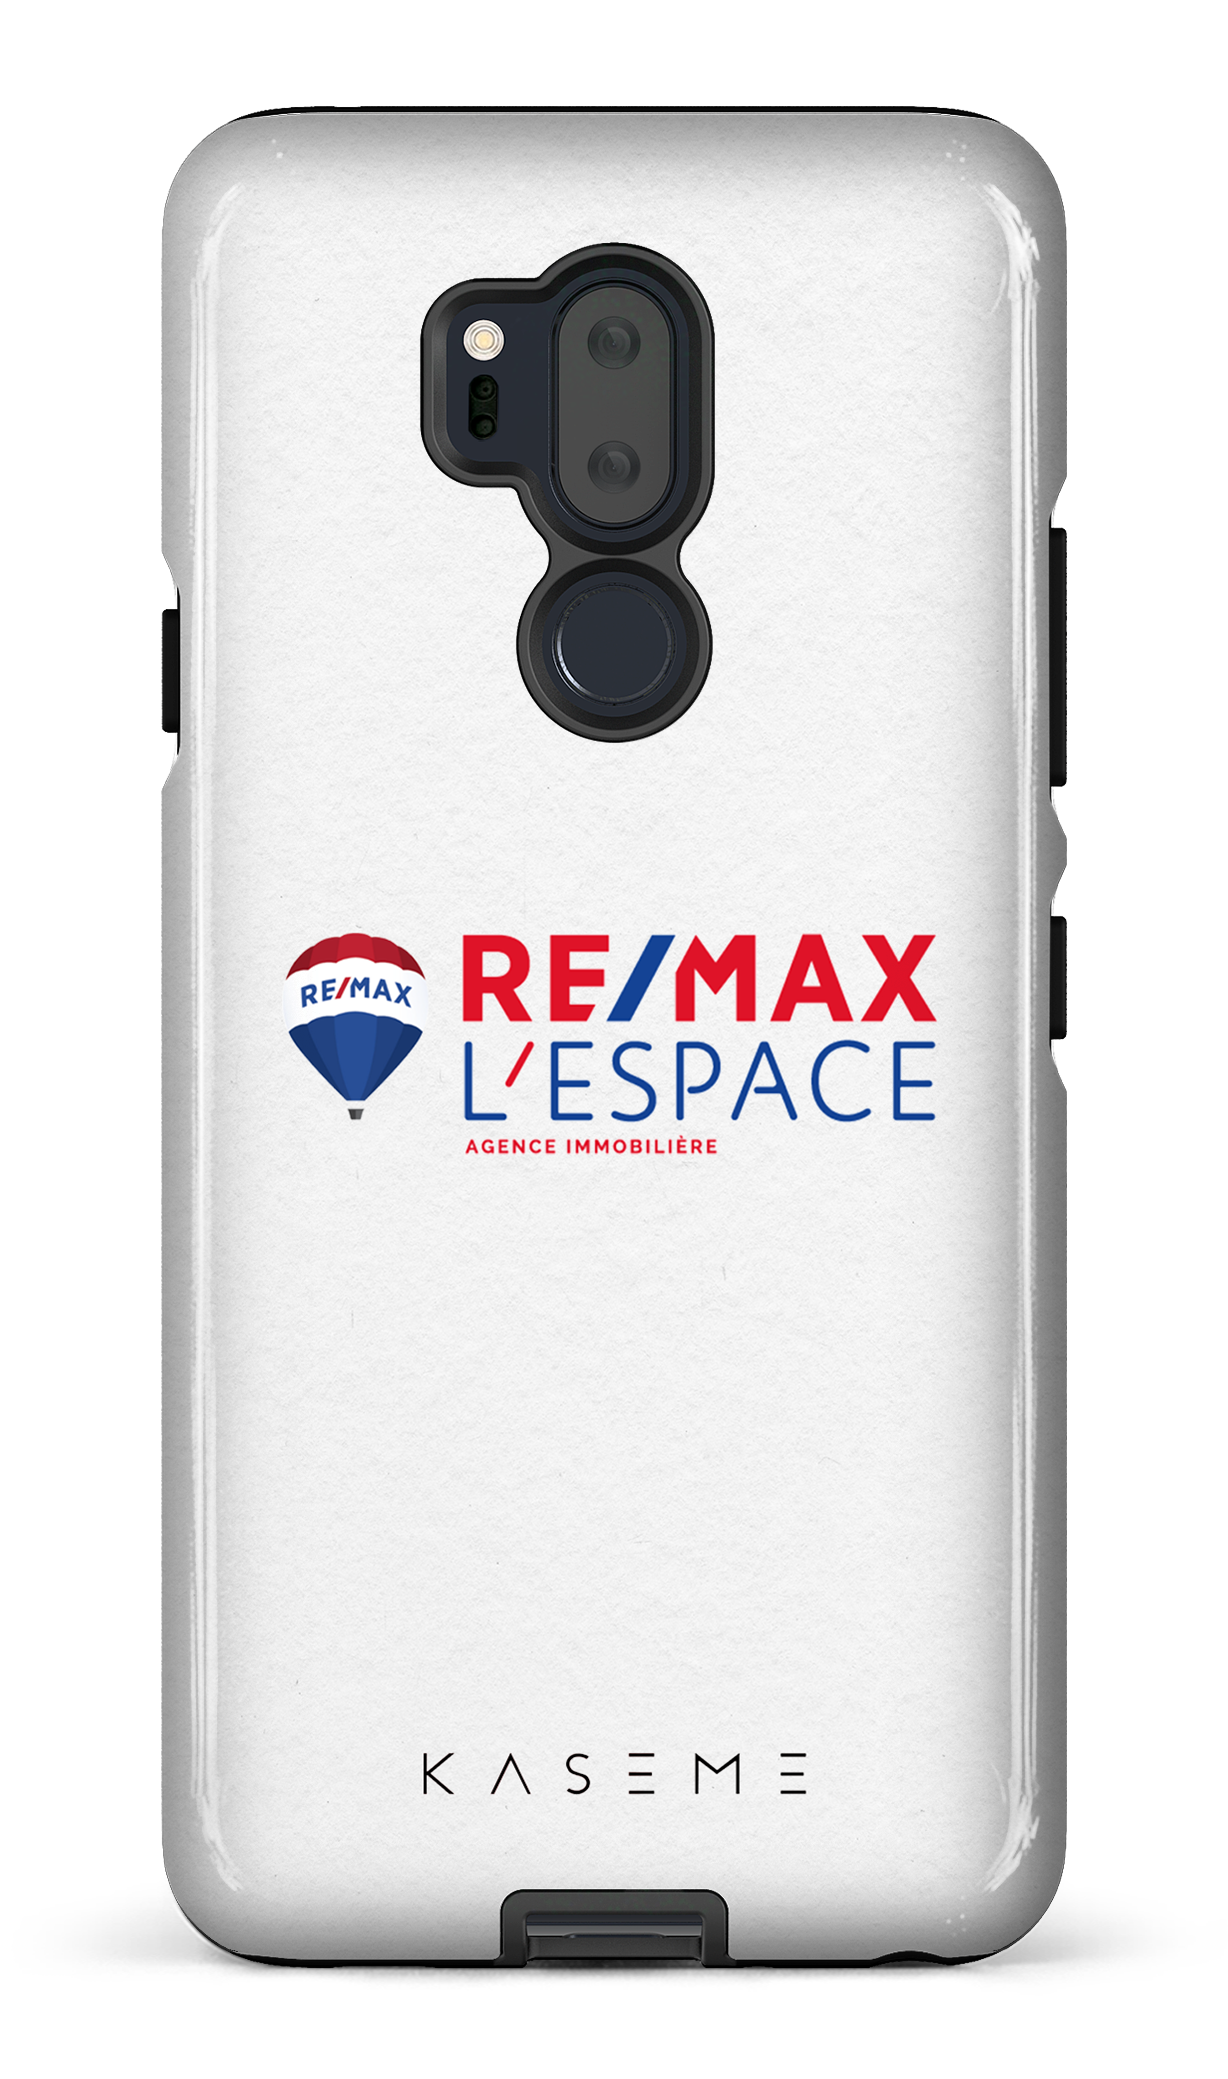 Remax L'Espace Blanc - LG G7